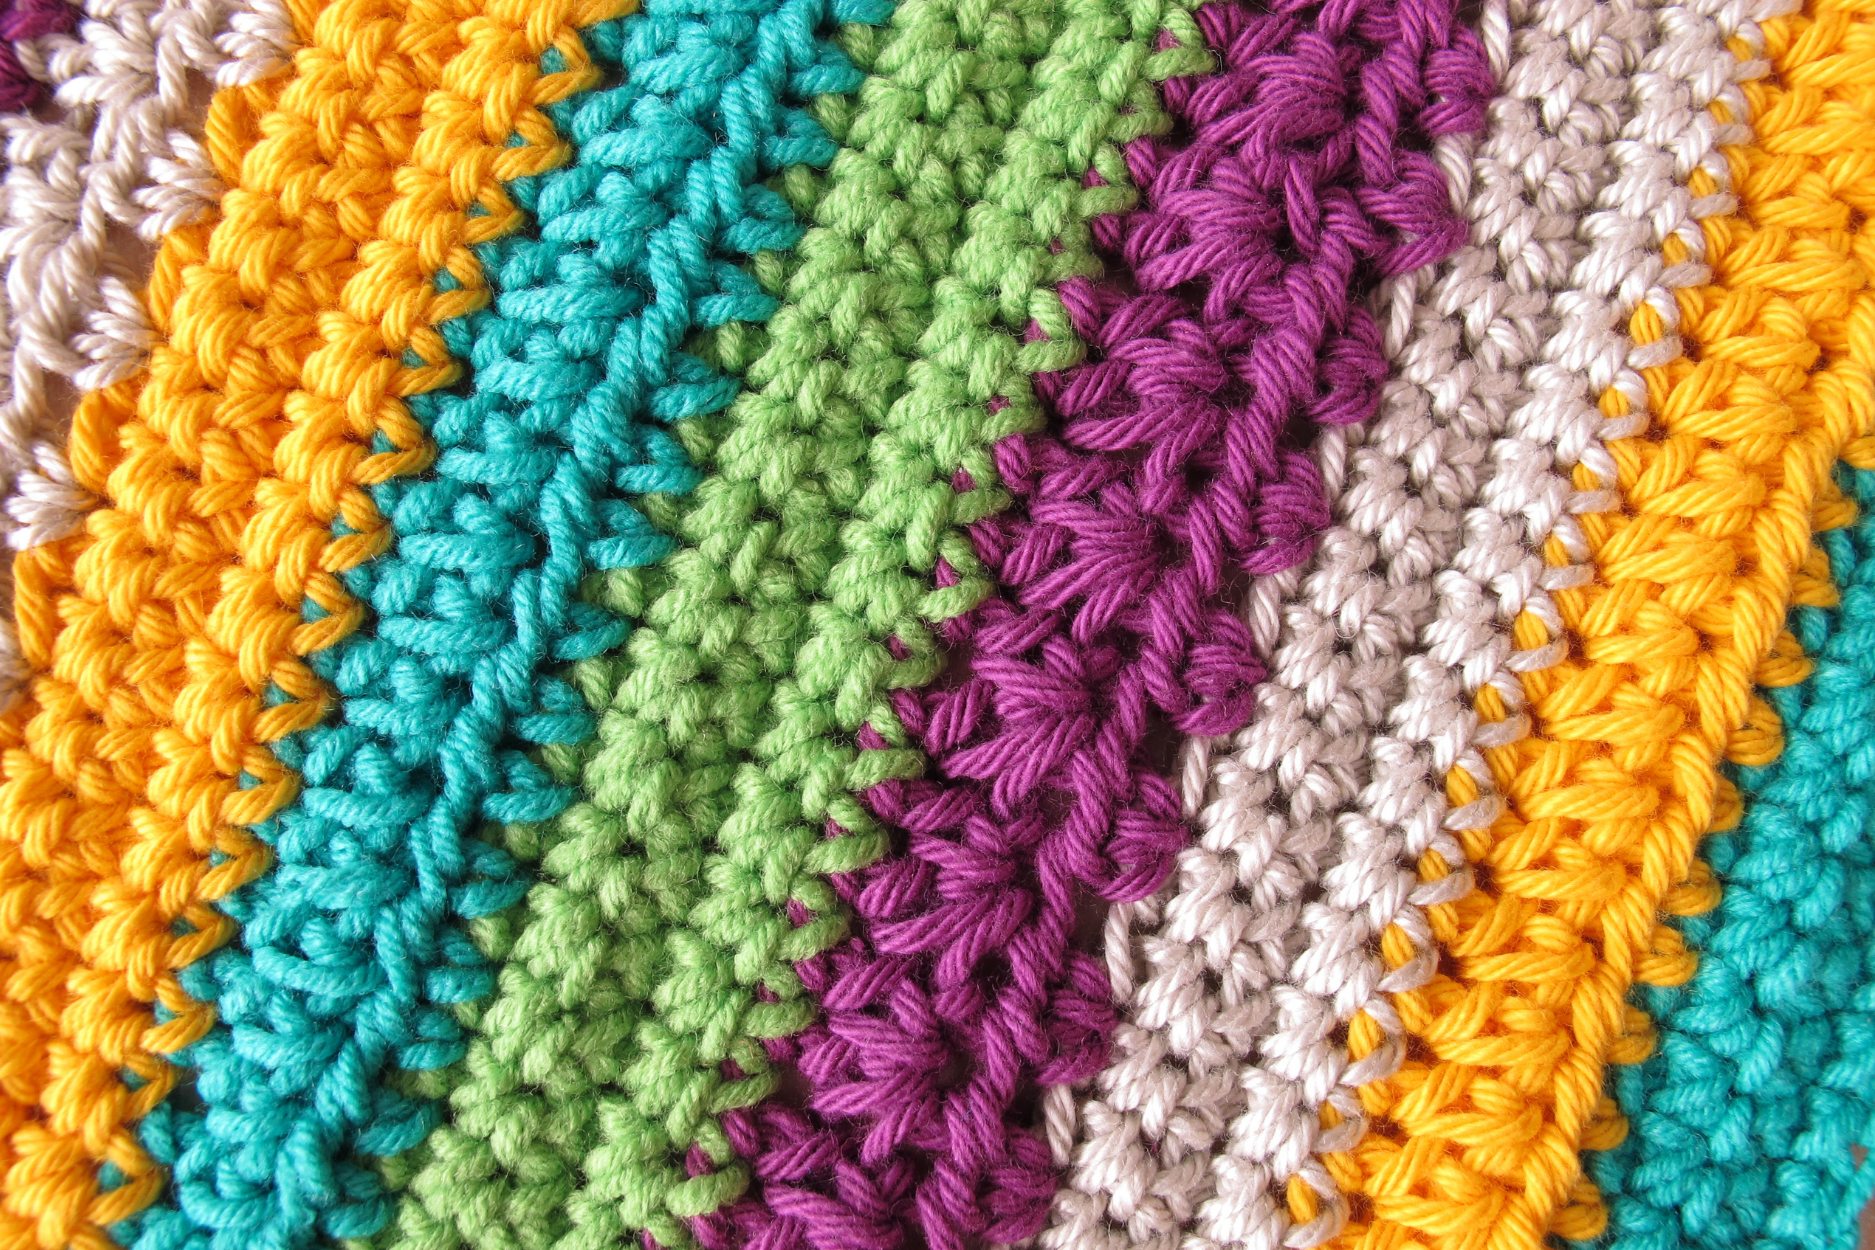 How to Wash Acrylic Crochet Items